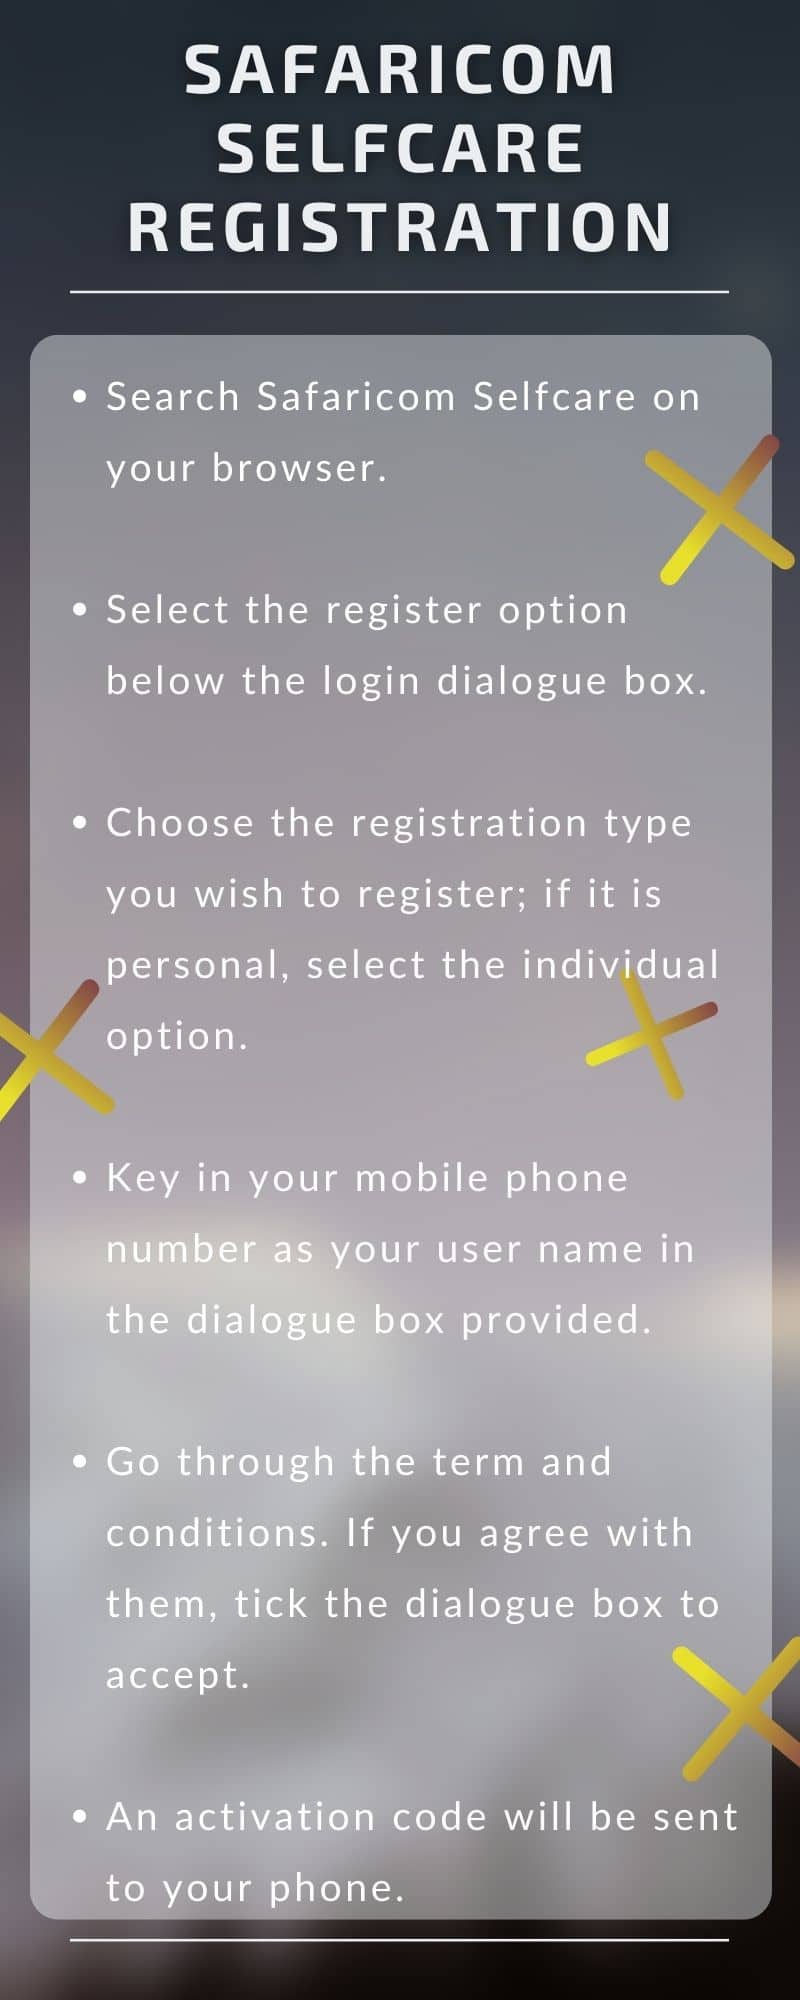 Safaricom Selfcare registration guide